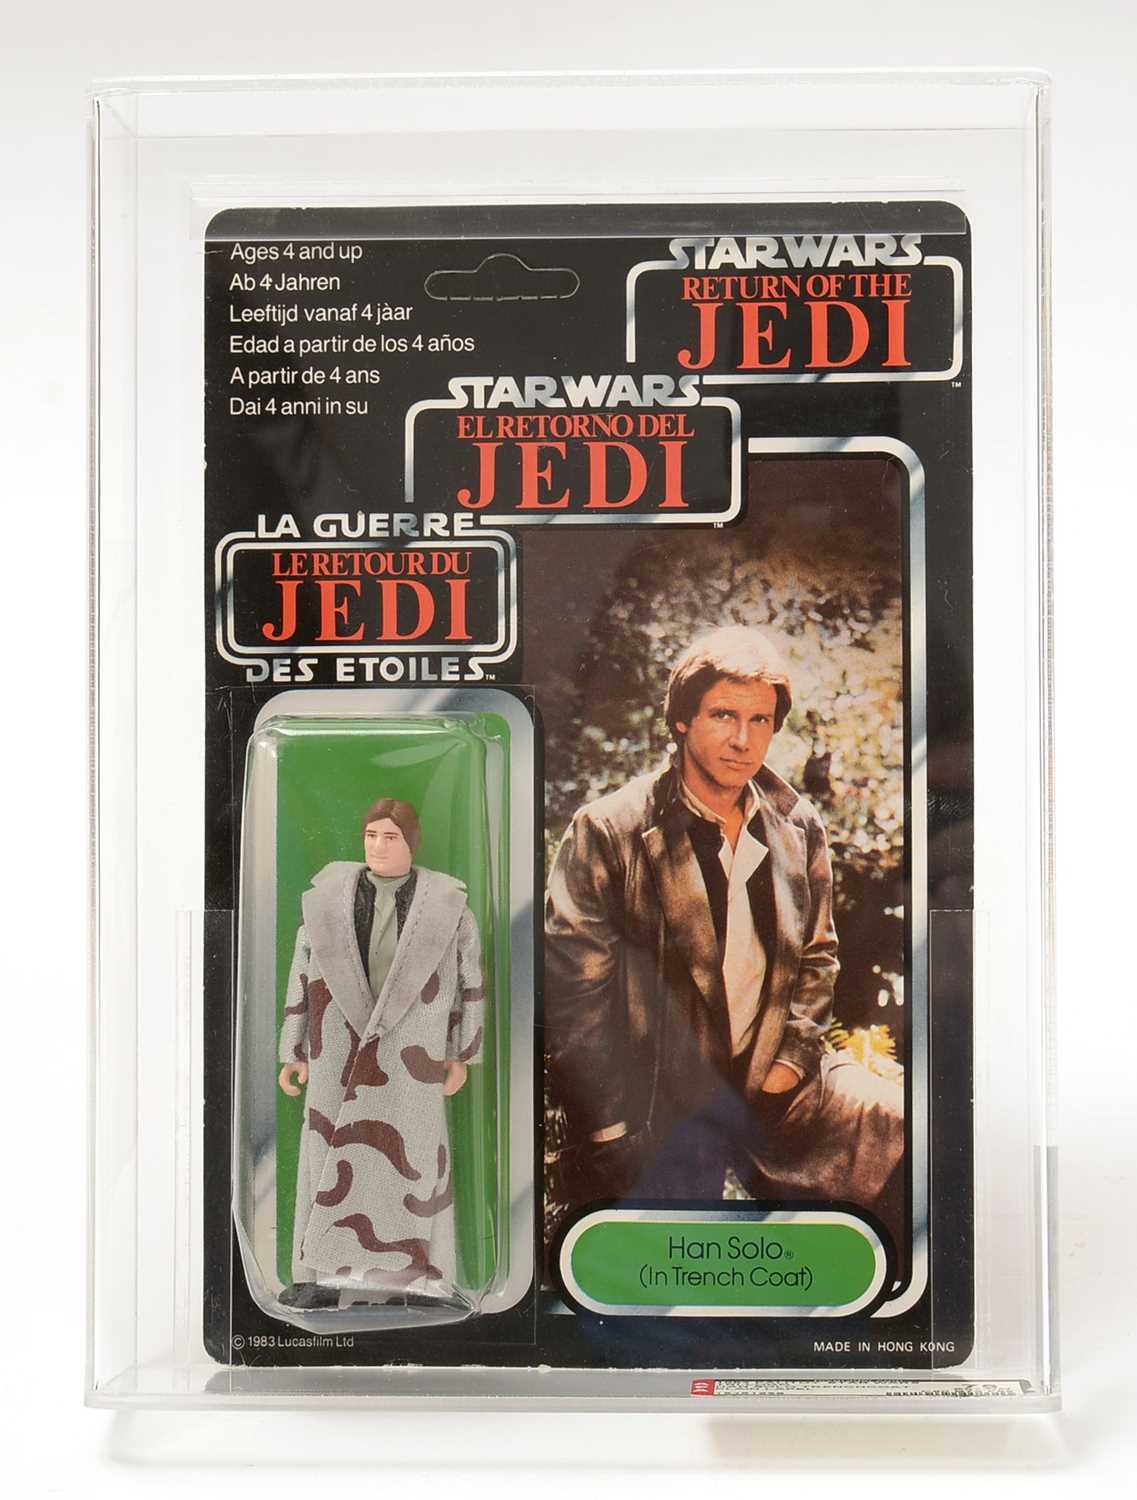 256 - Star Wars Return of the Jedi Han Solo carded figure, AFA graded 